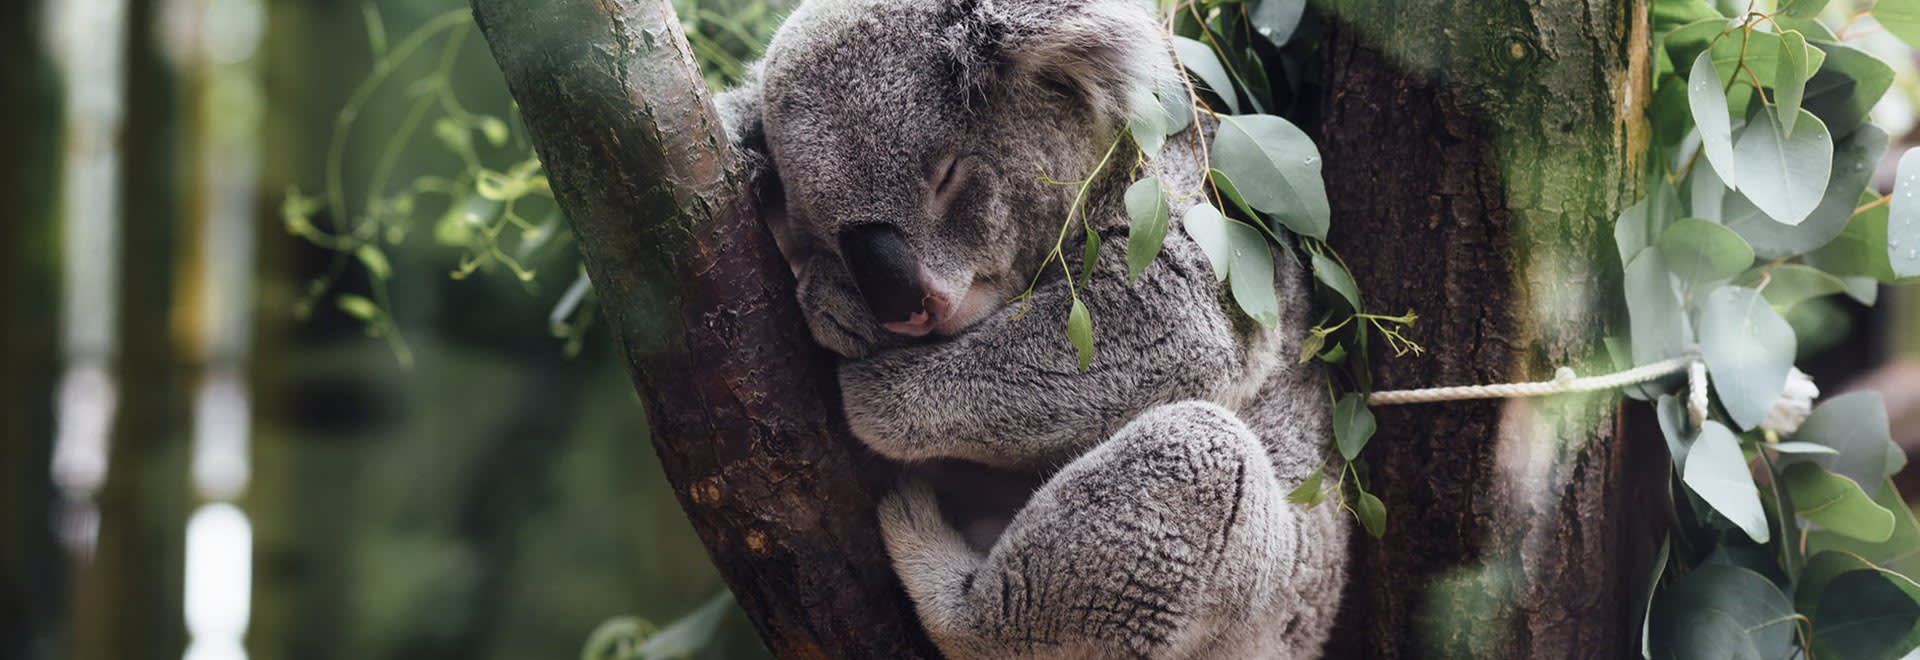 A picture of coala bear sleeping on the tree